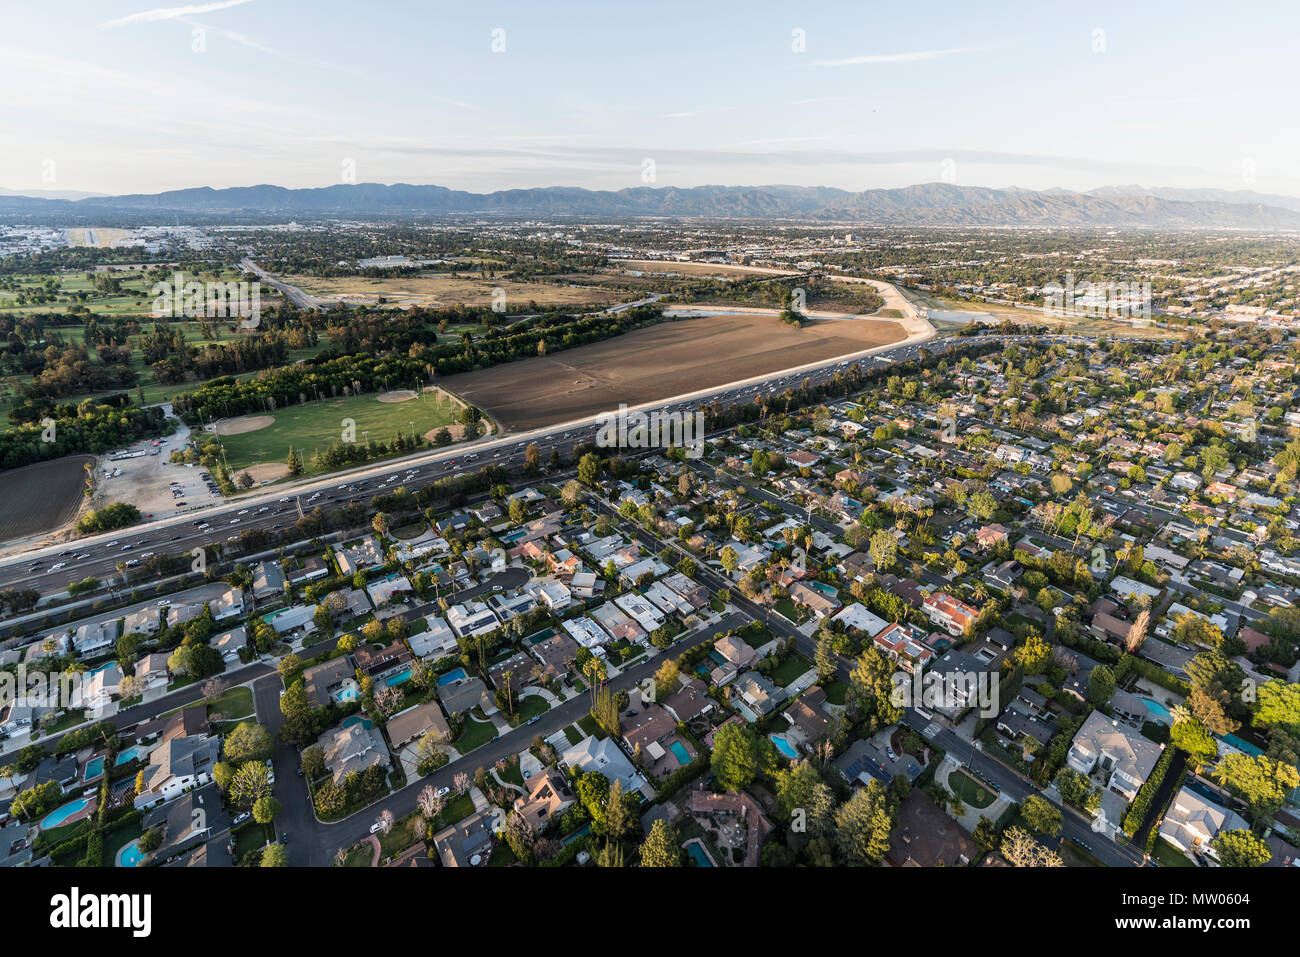 Aerial view of Encino, the Ventura 101 Freeway and Sepulveda Basin in the San Fernando Valley area of Los Angeles, California. Stock Photo